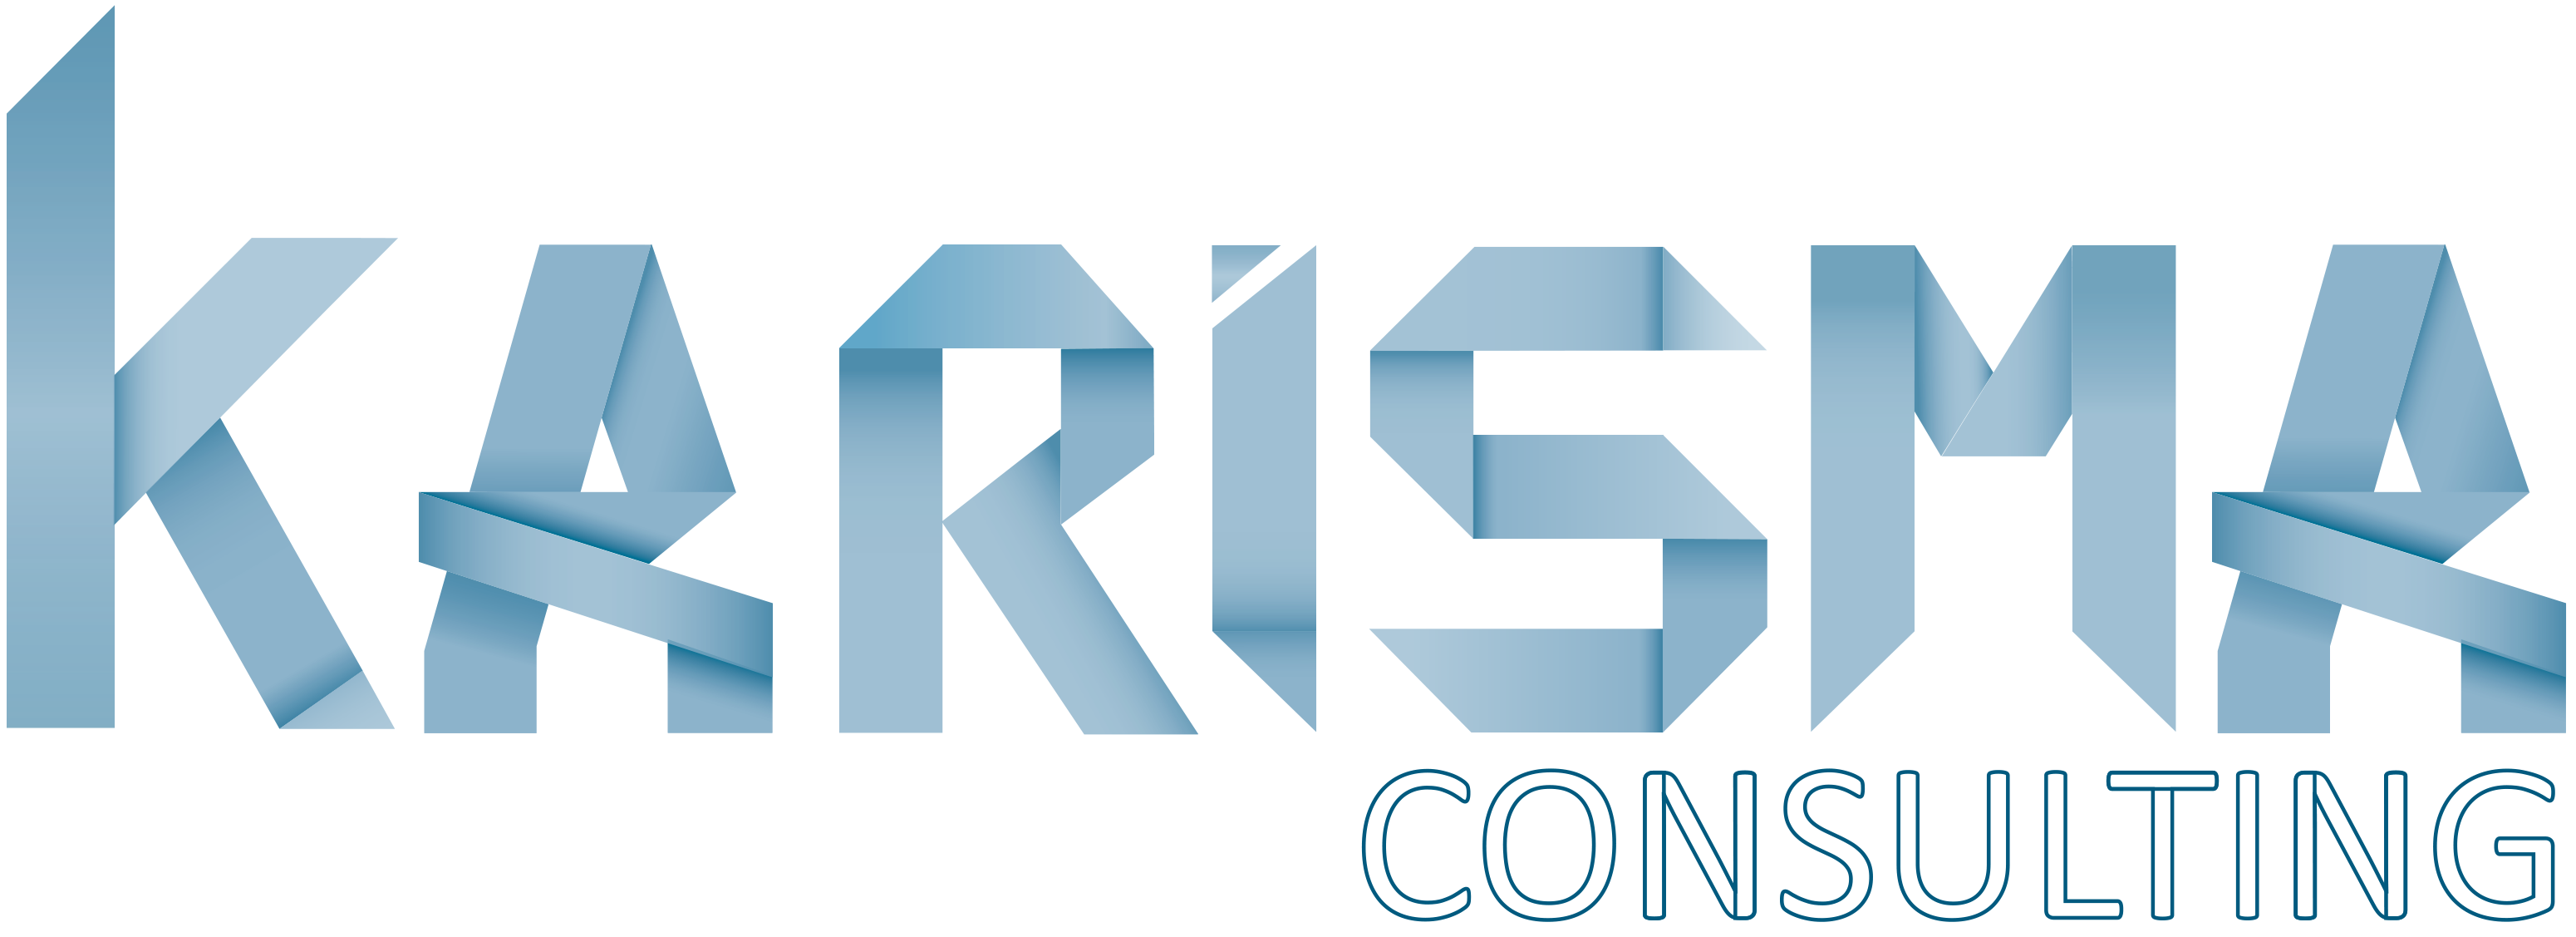 Logo Karisma consulting